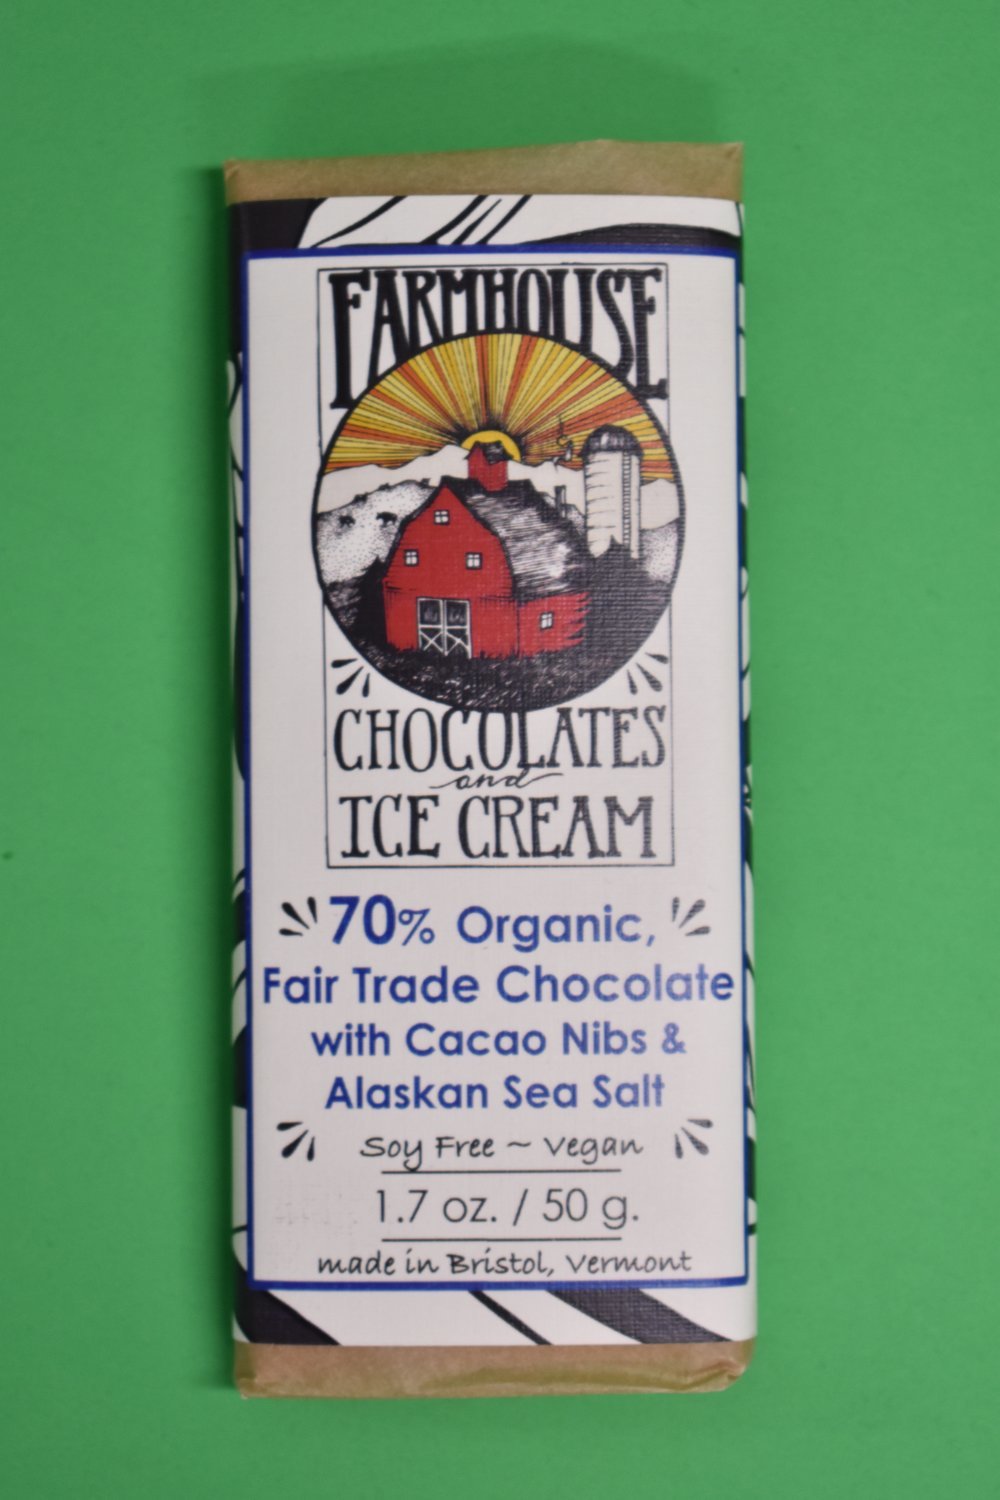 Fair Trade Chocolate with Coco Nibs & Alaskan sea Salt